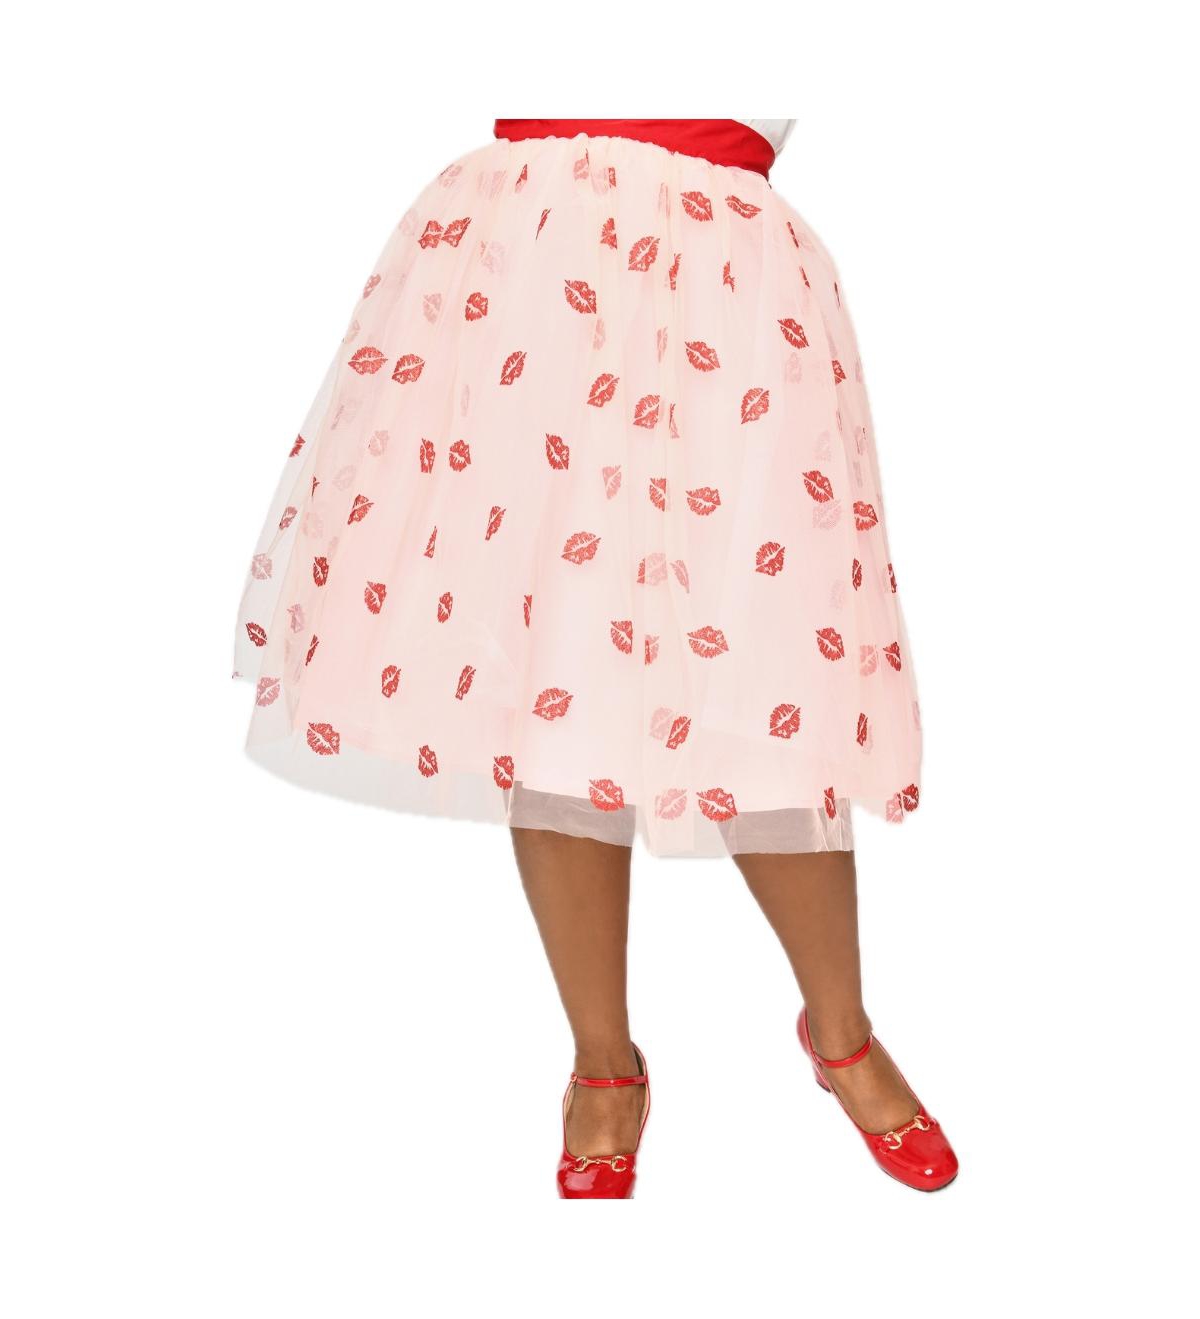 Plus Size Brilliance Swing Skirt - Pink/red glitter lips